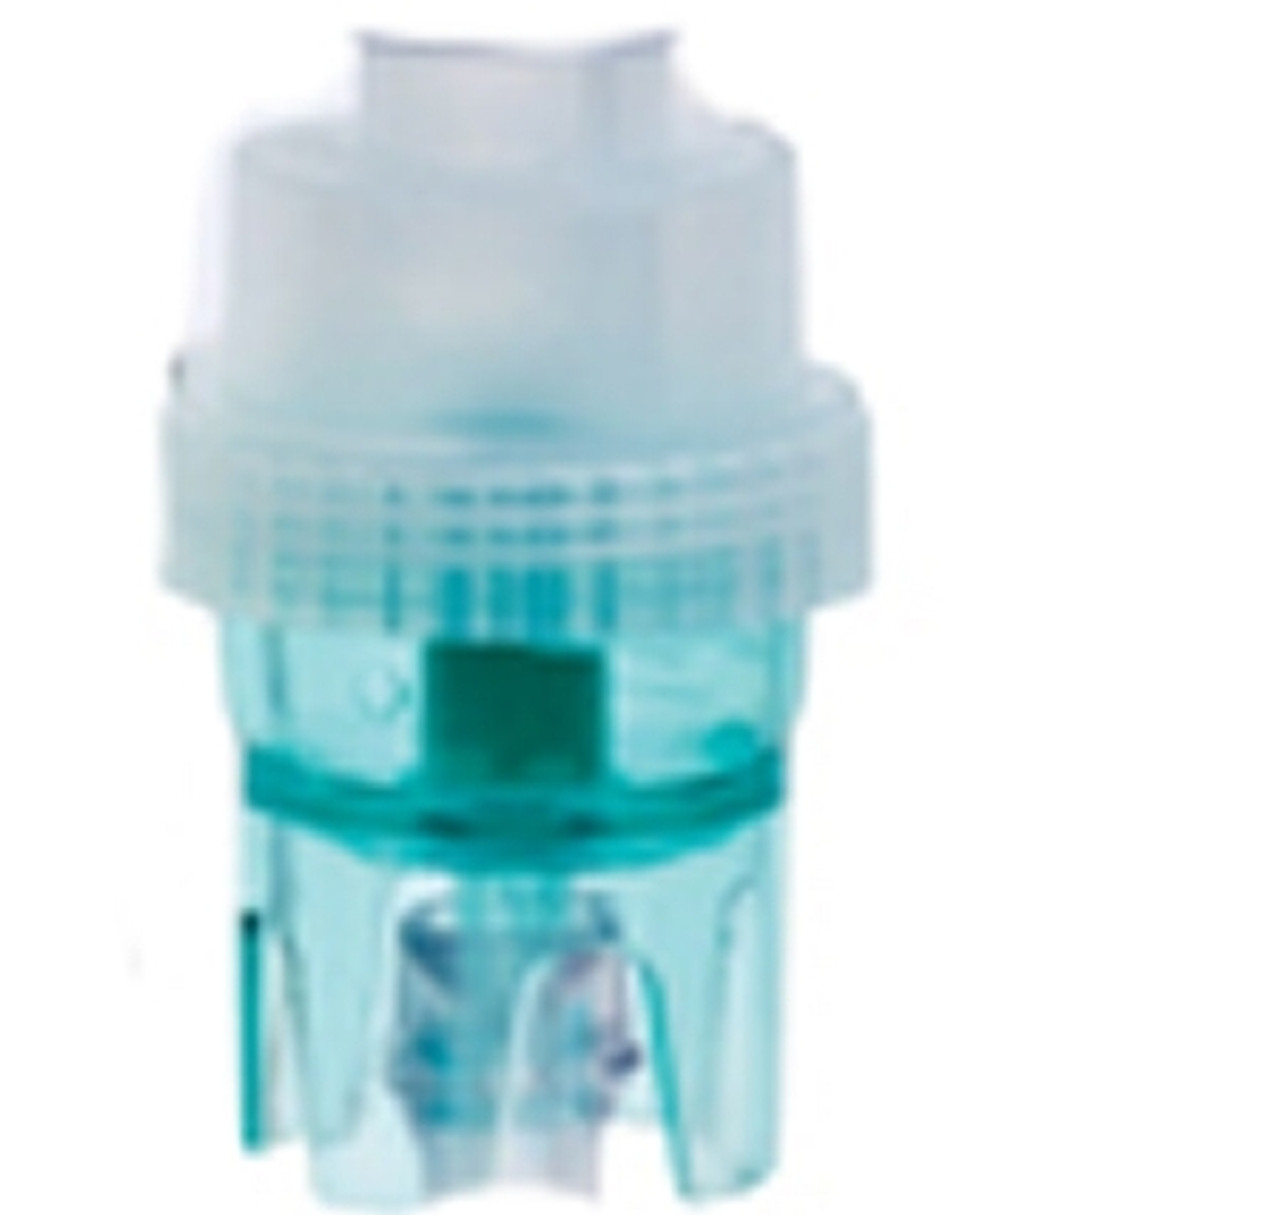 Hudson UP-DRAFT II OPTI-NEB Nebulizer, Case of 50 - Medex Supply